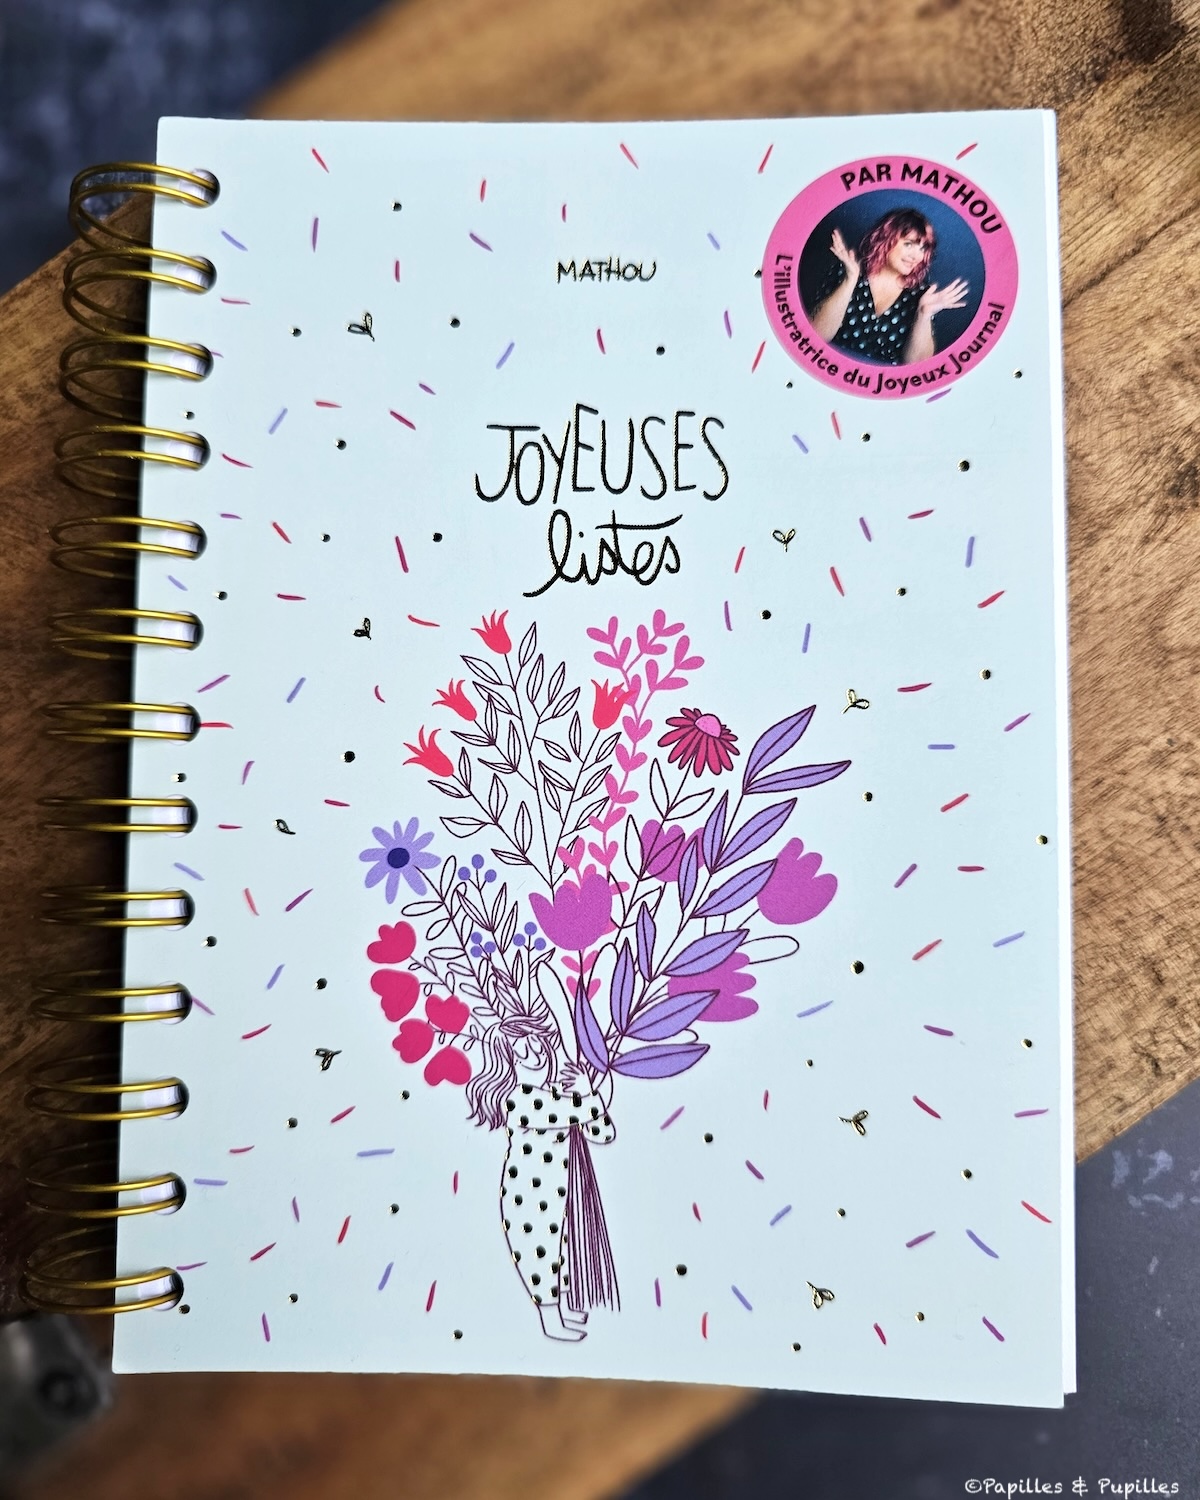 Le Joyeux Journal et les Joyeuses listes de Mathou